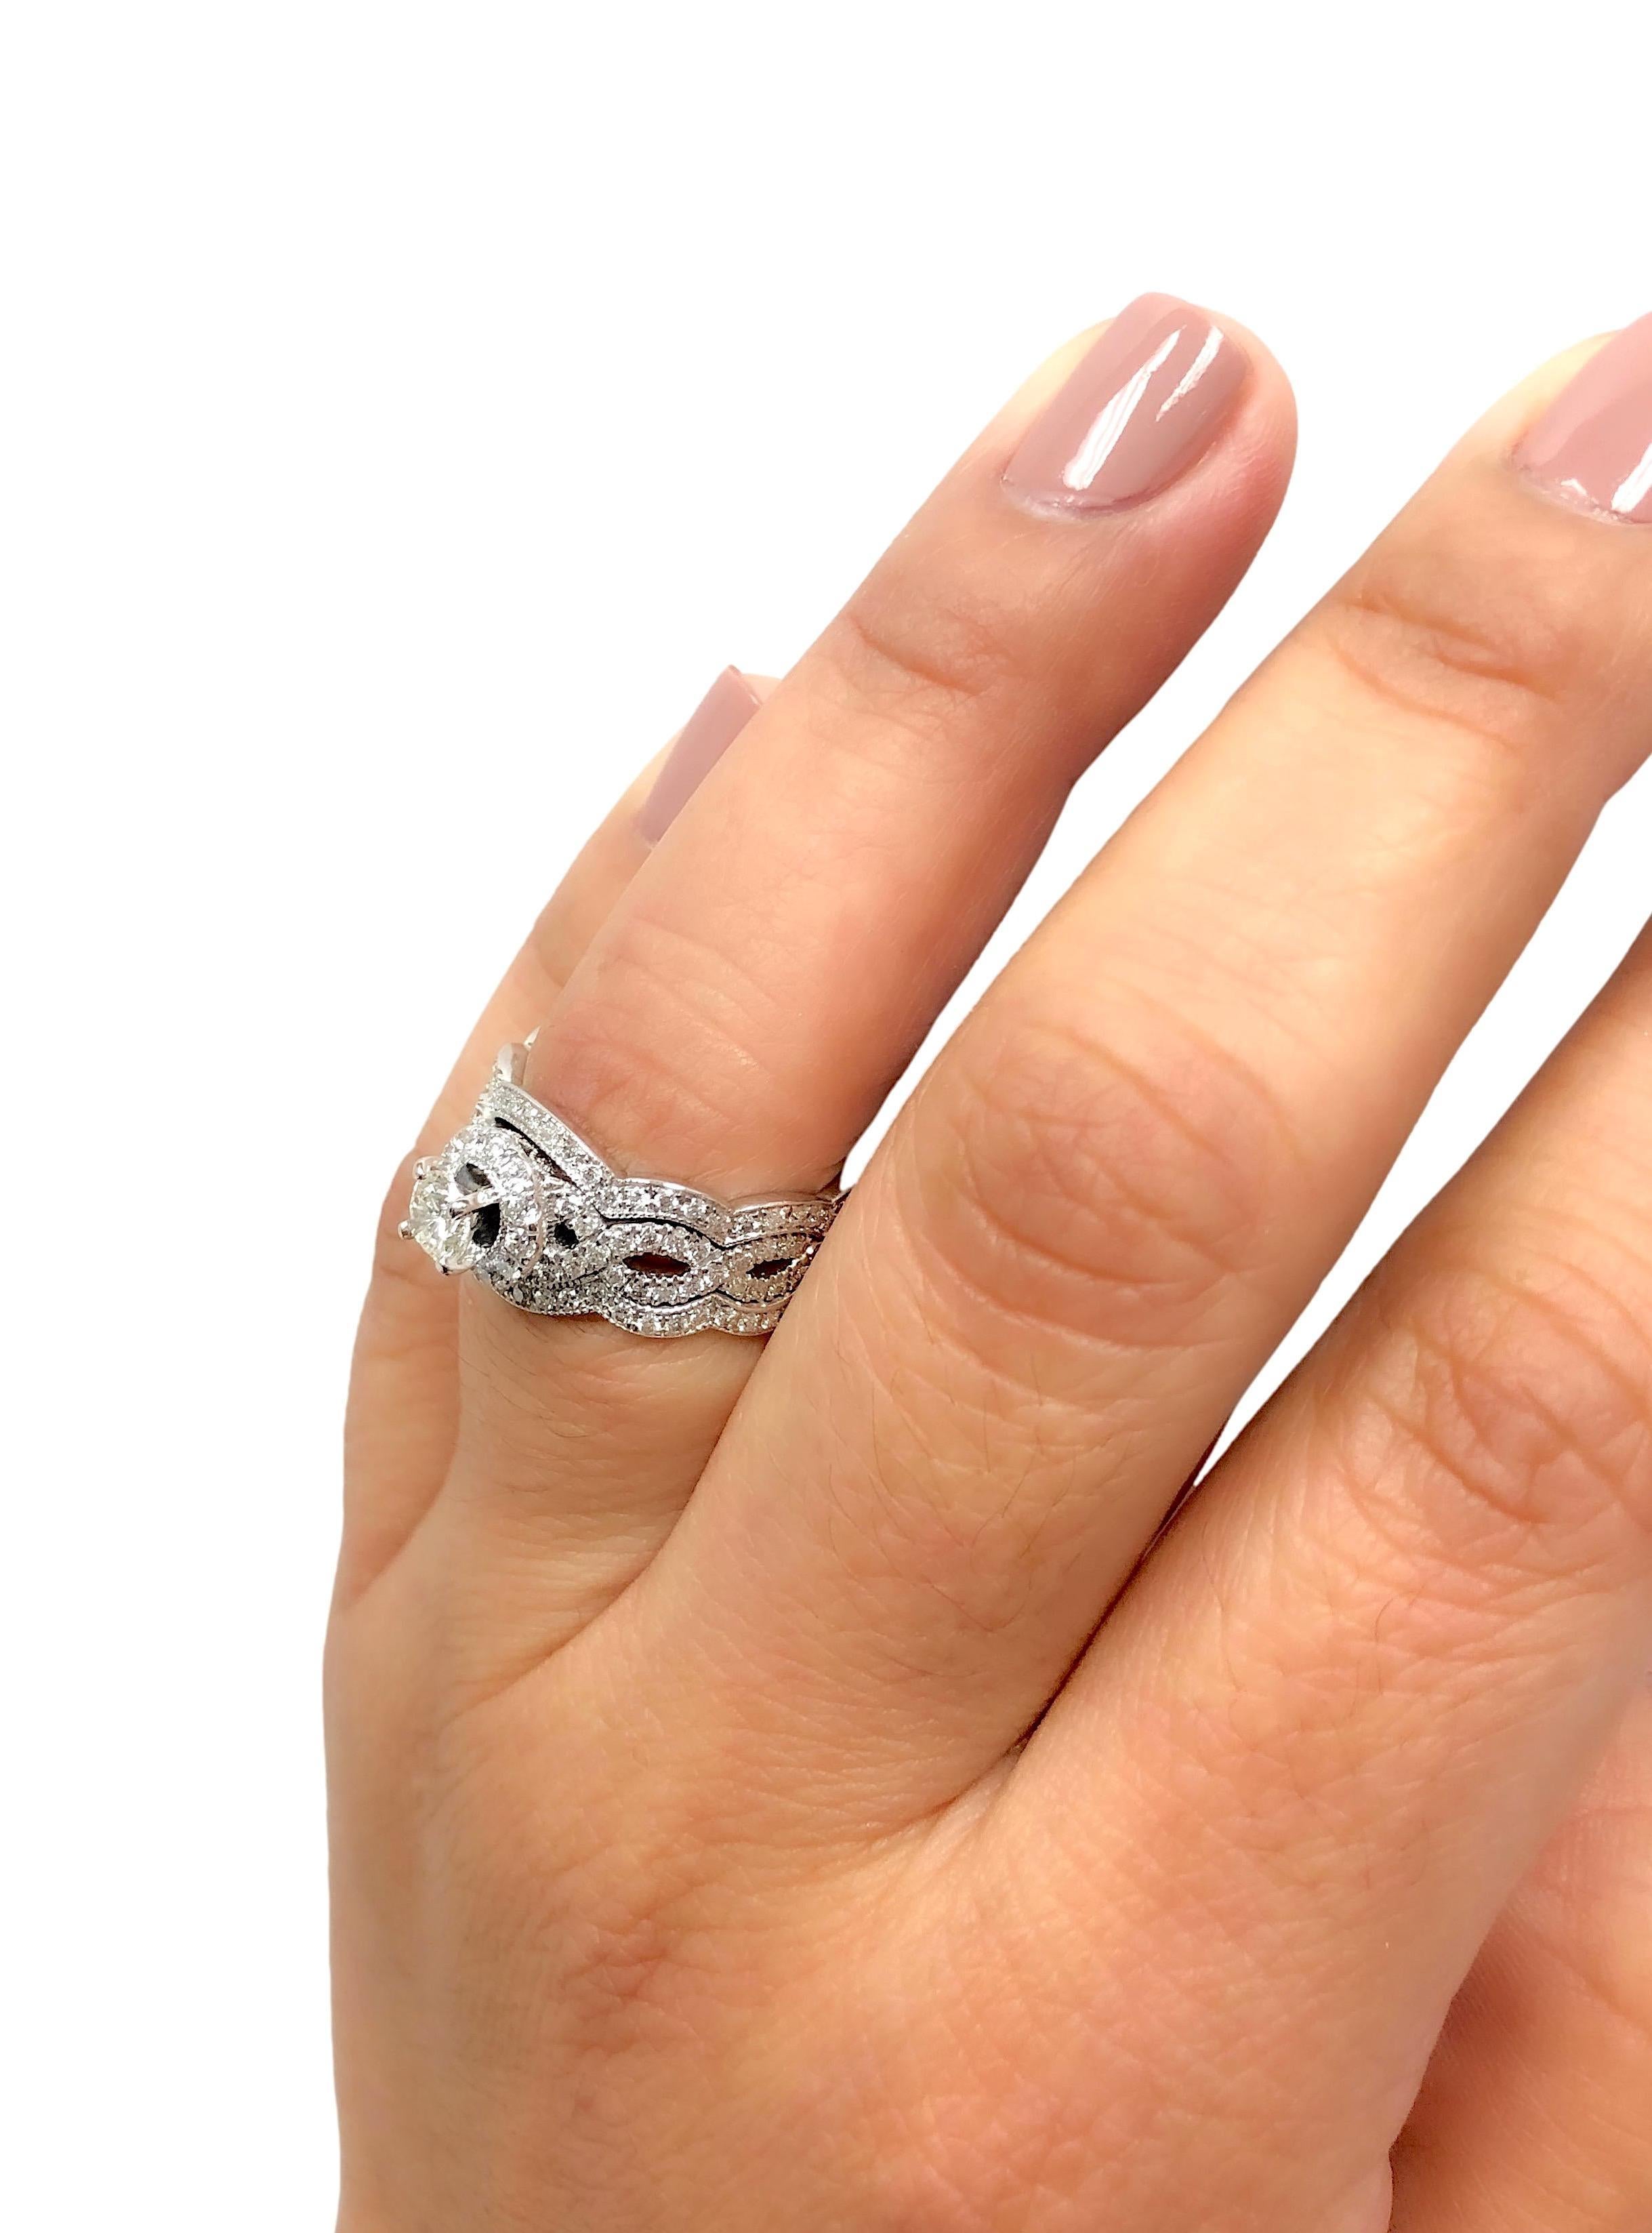 Neil Lane 14K White Gold 1.02ct TW Round Diamond Engagement Ring For Sale 2